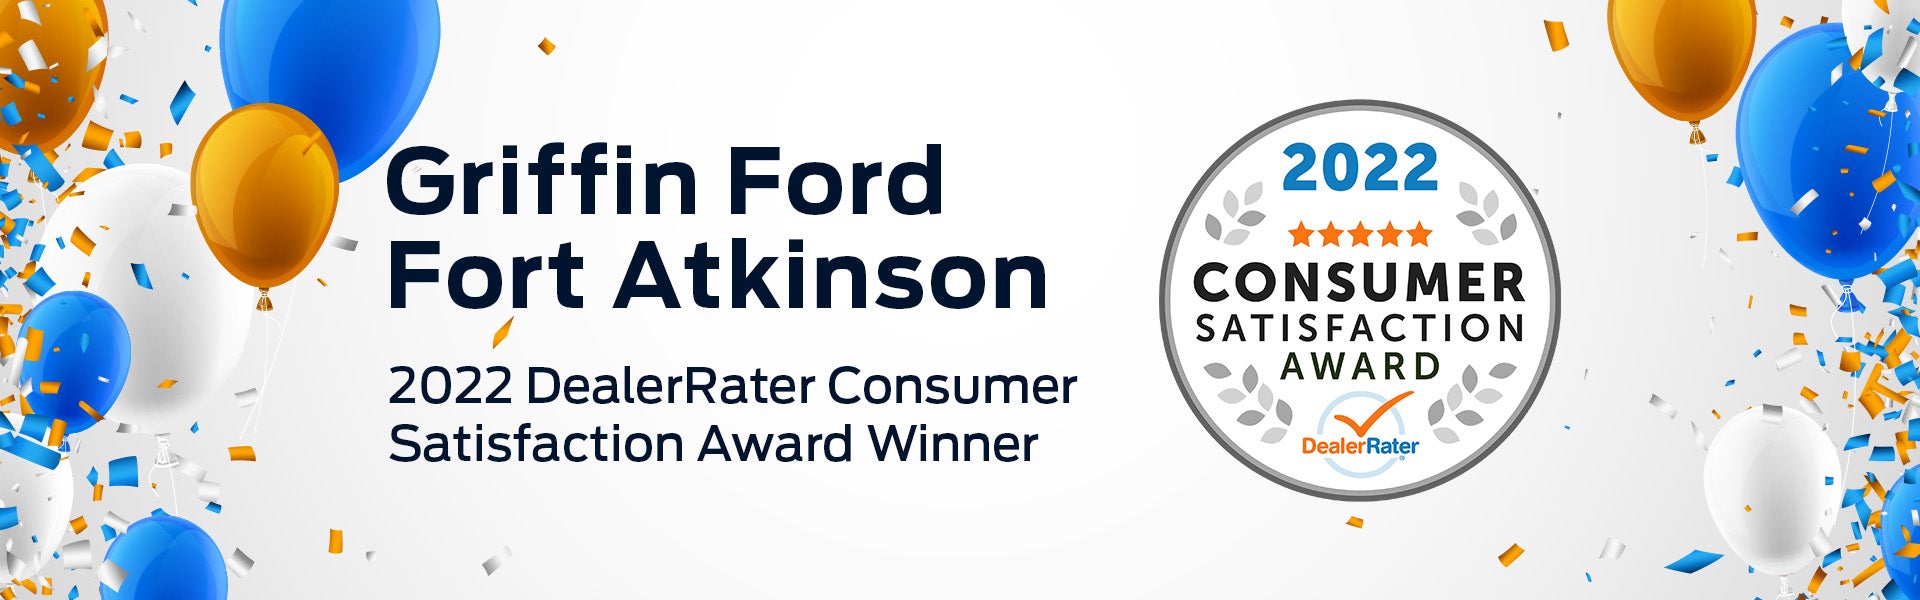 2022 DealerRater Consumer Satisfaction Award Winner